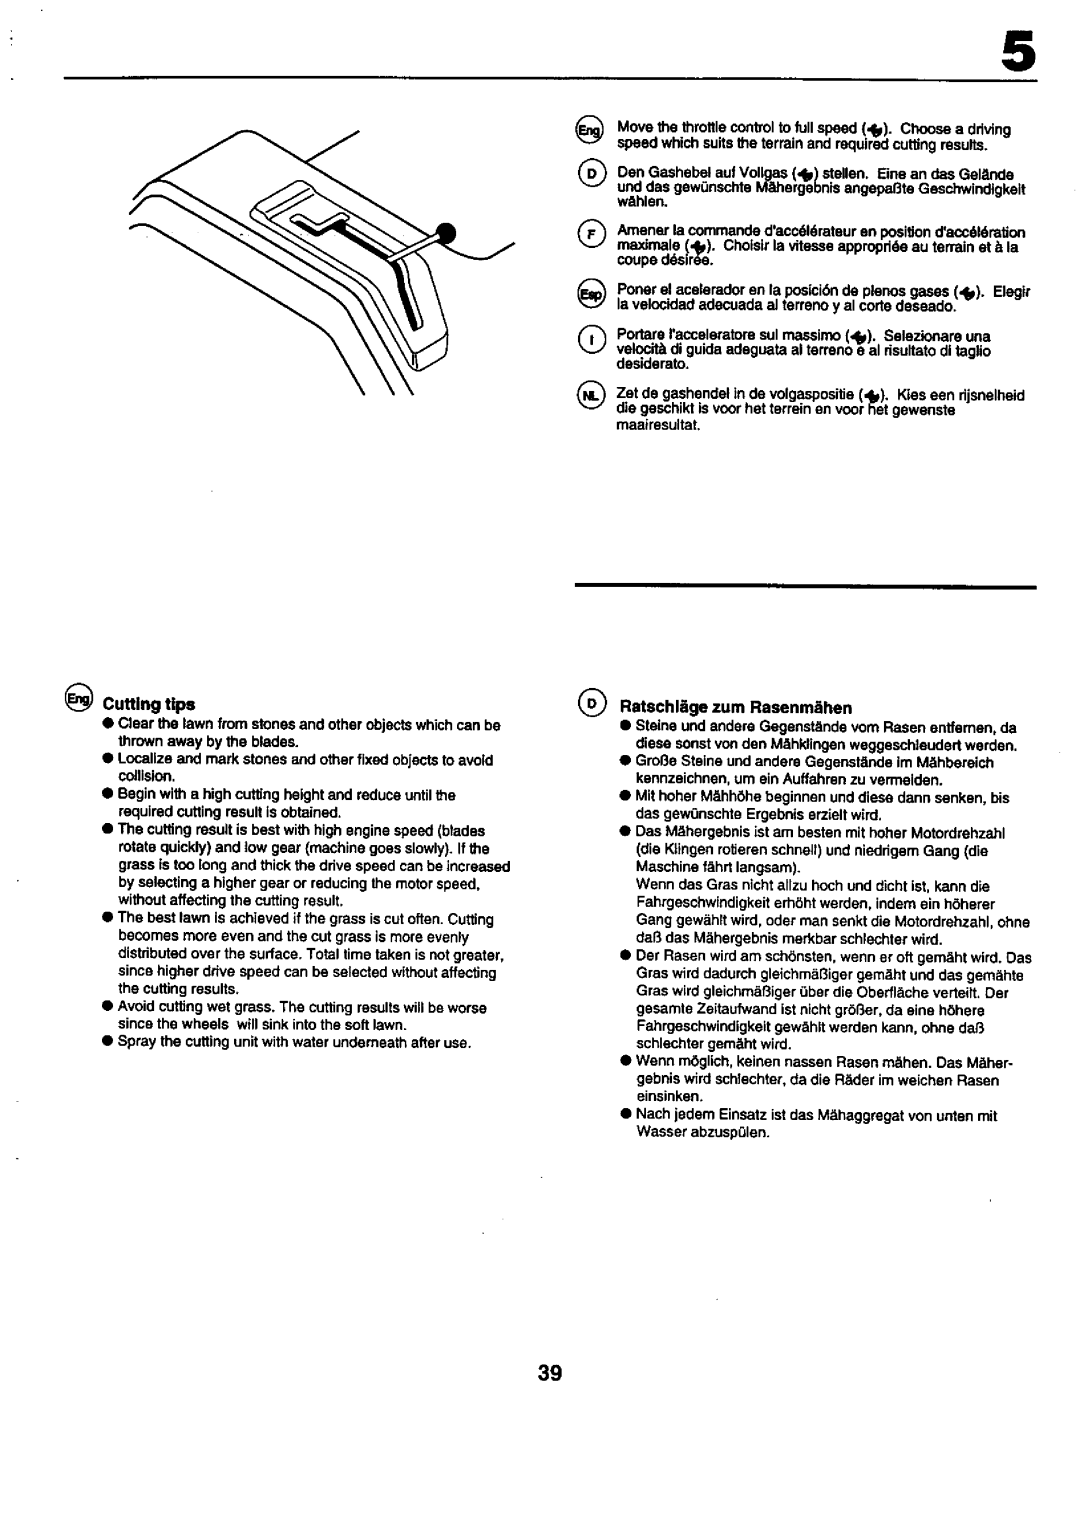 Craftsman 25949 instruction manual _ Cuttlng tips 